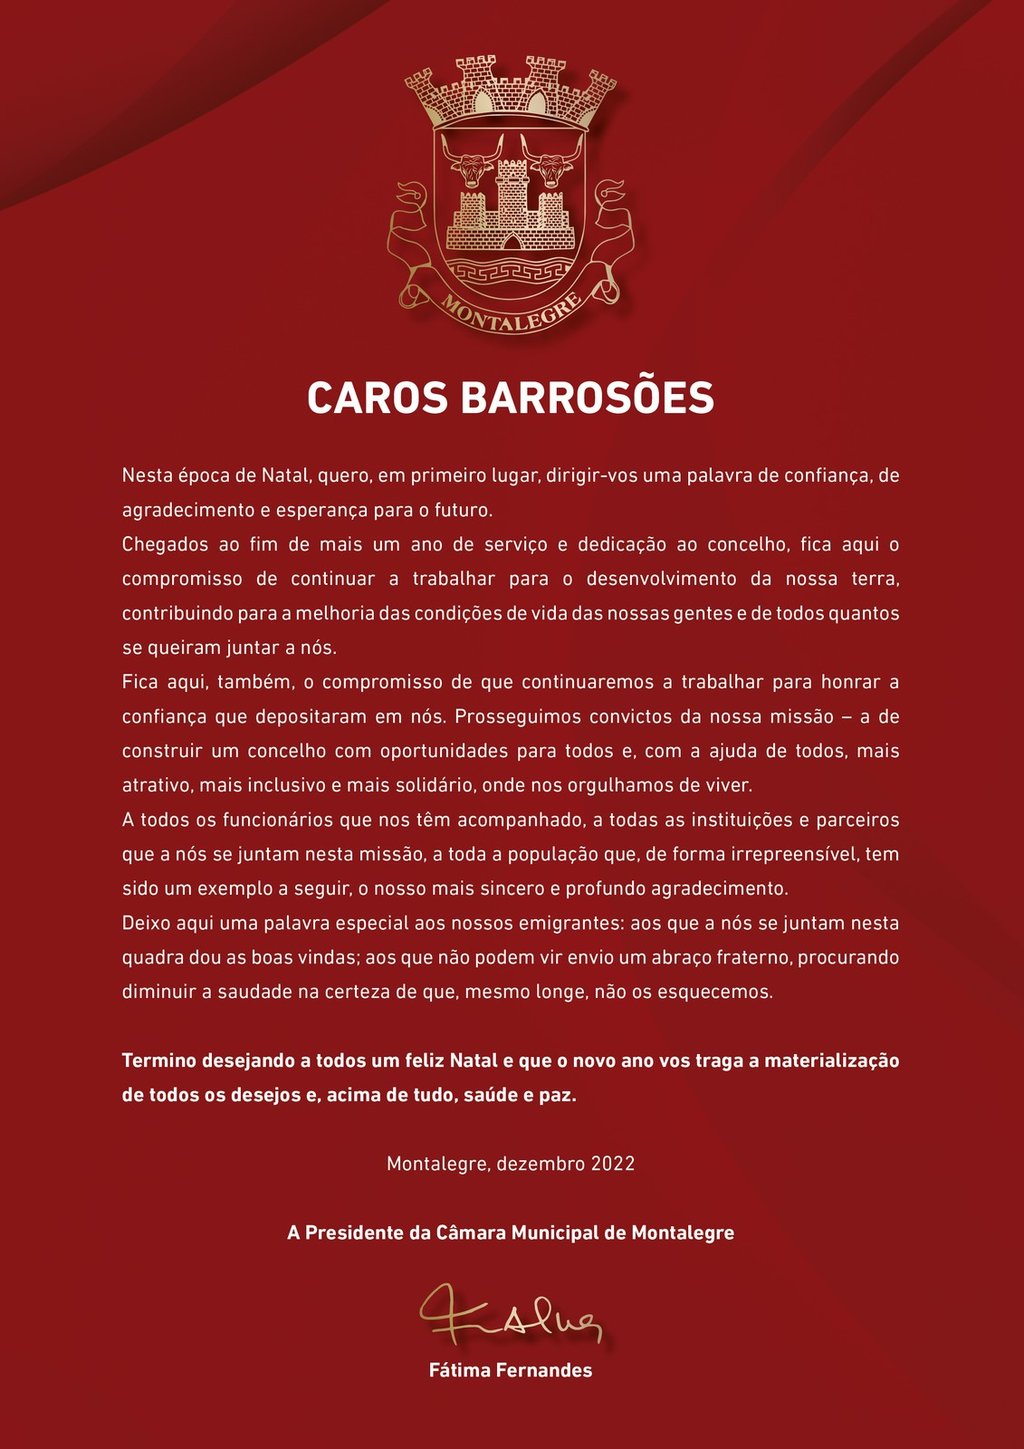 Fátima Fernandes (Presidente - Município de Montalegre) - Mensagem de Natal 2022